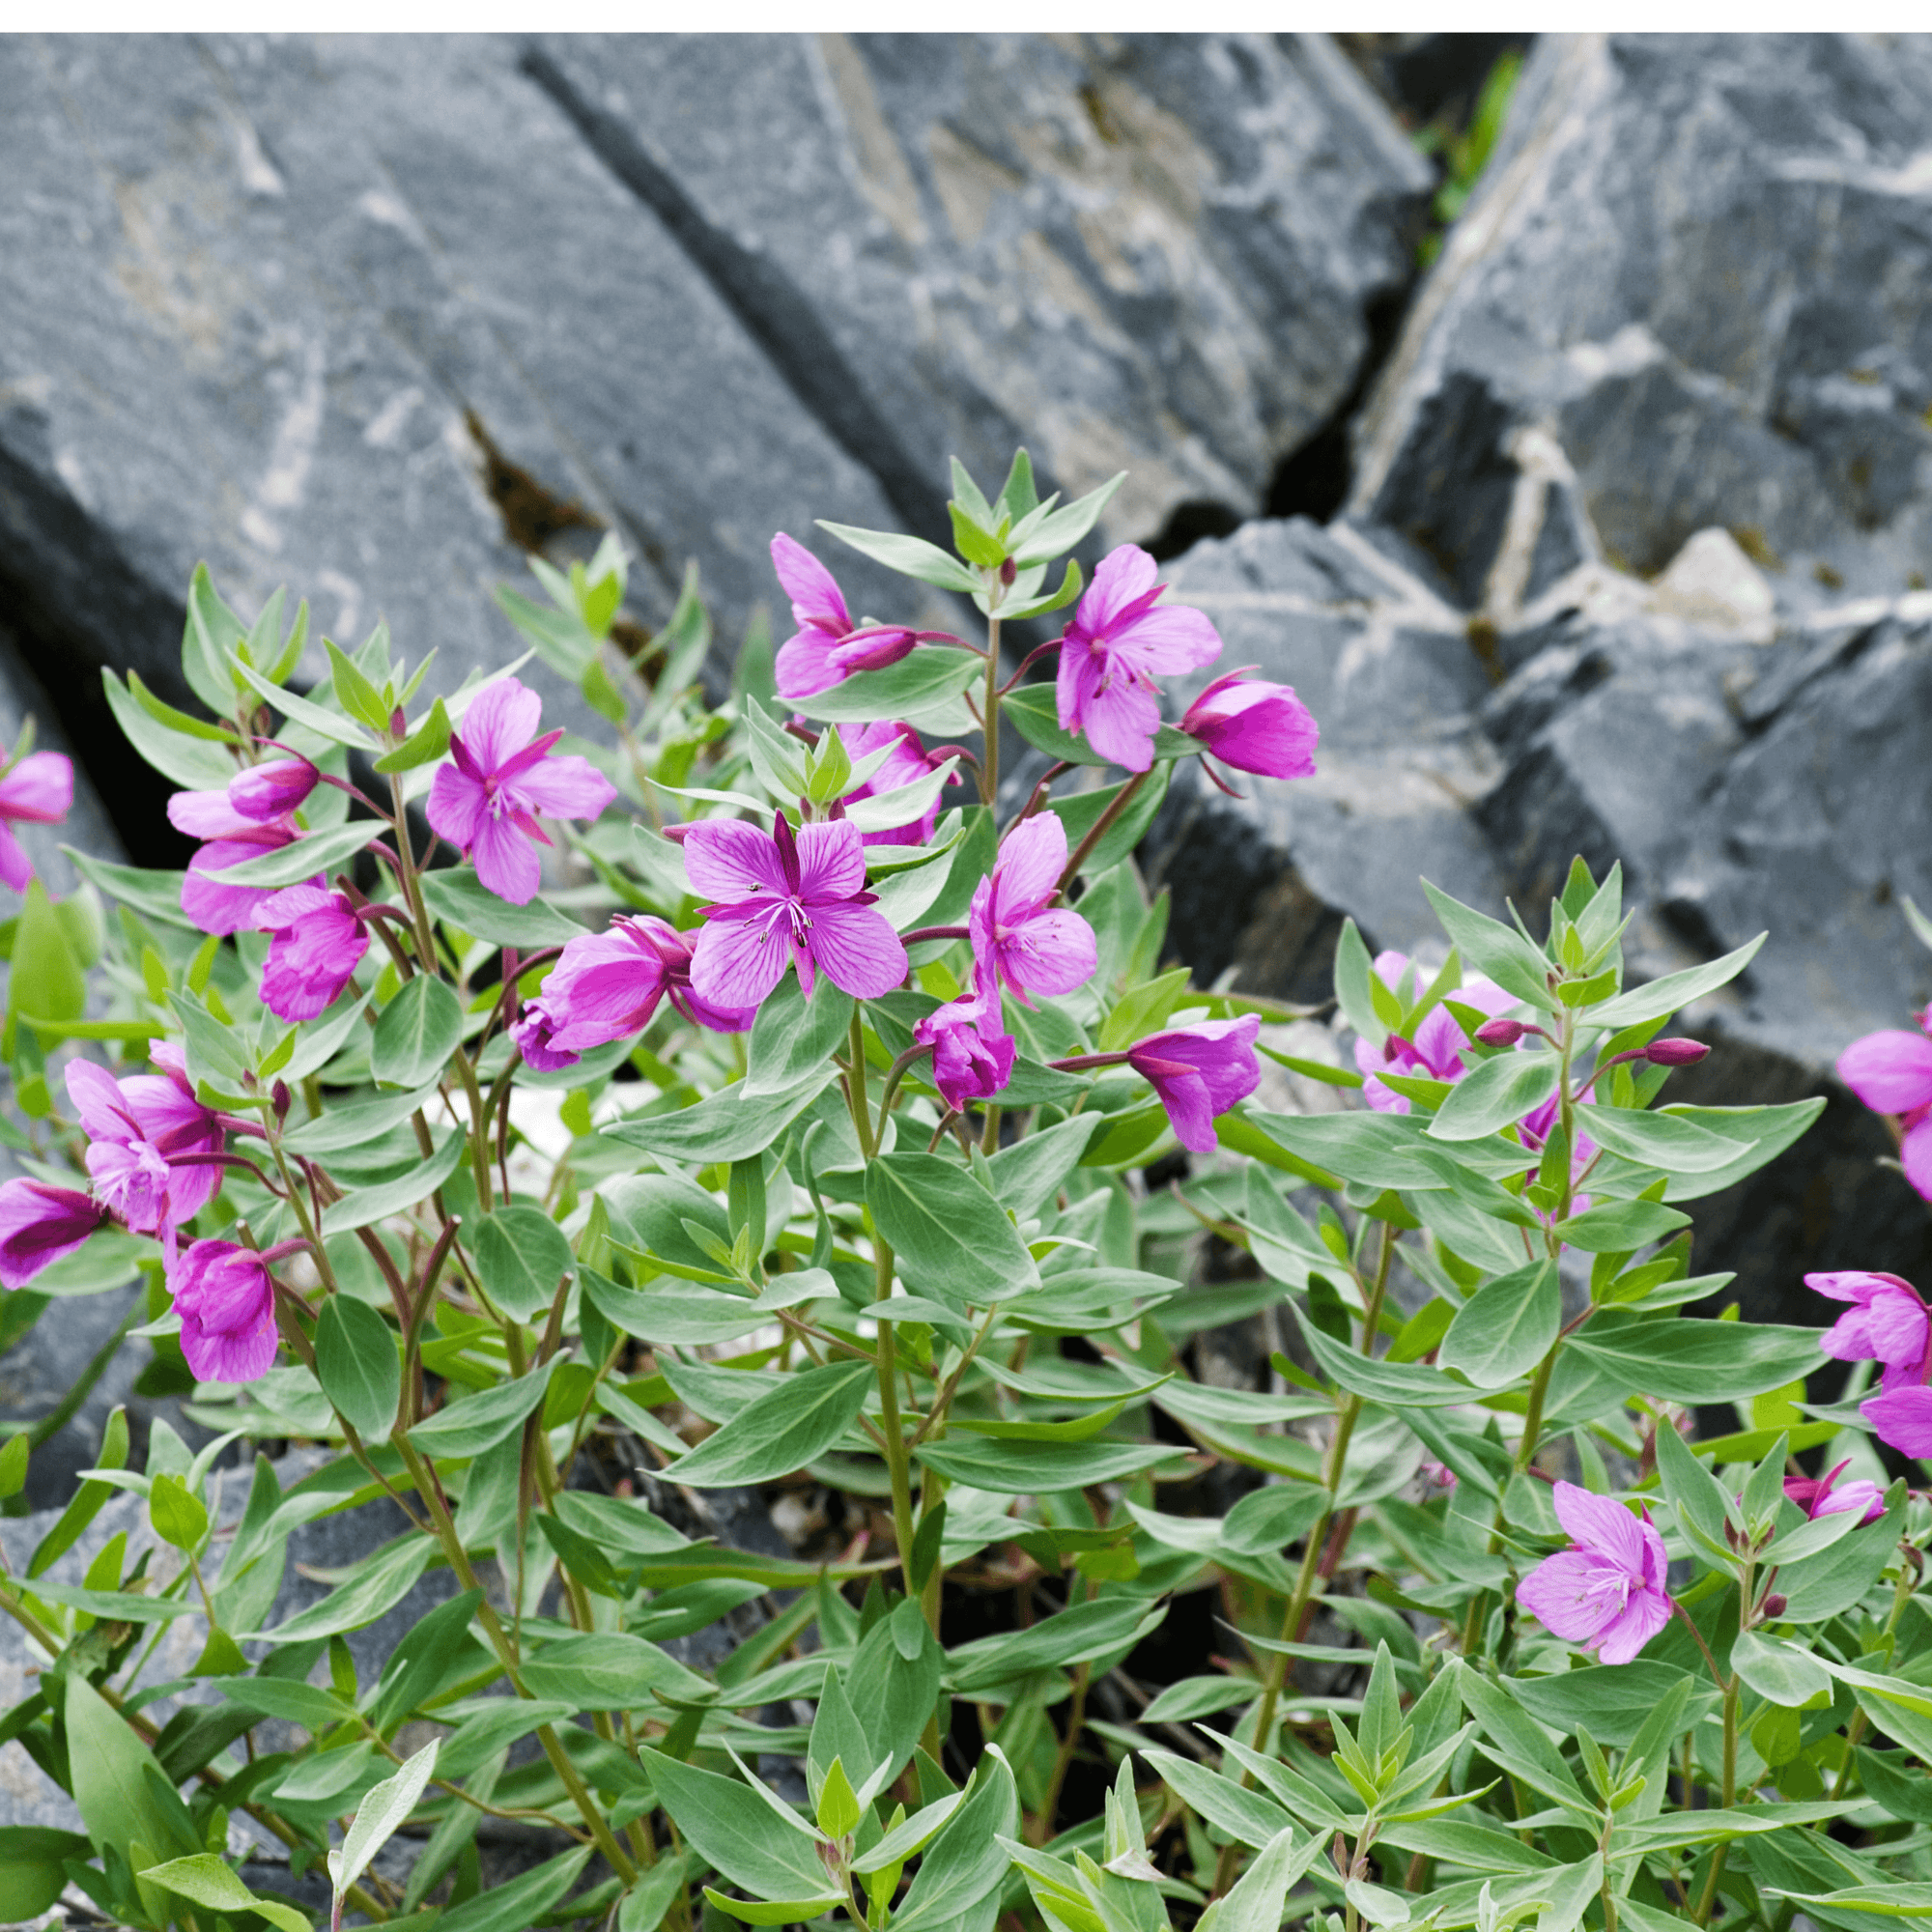 Be Bohemian Botanical Sea Serum Wild Geranium. Bright purple Wild Geranium grows freely in nature against a back drop of weathered, mountainous stone.